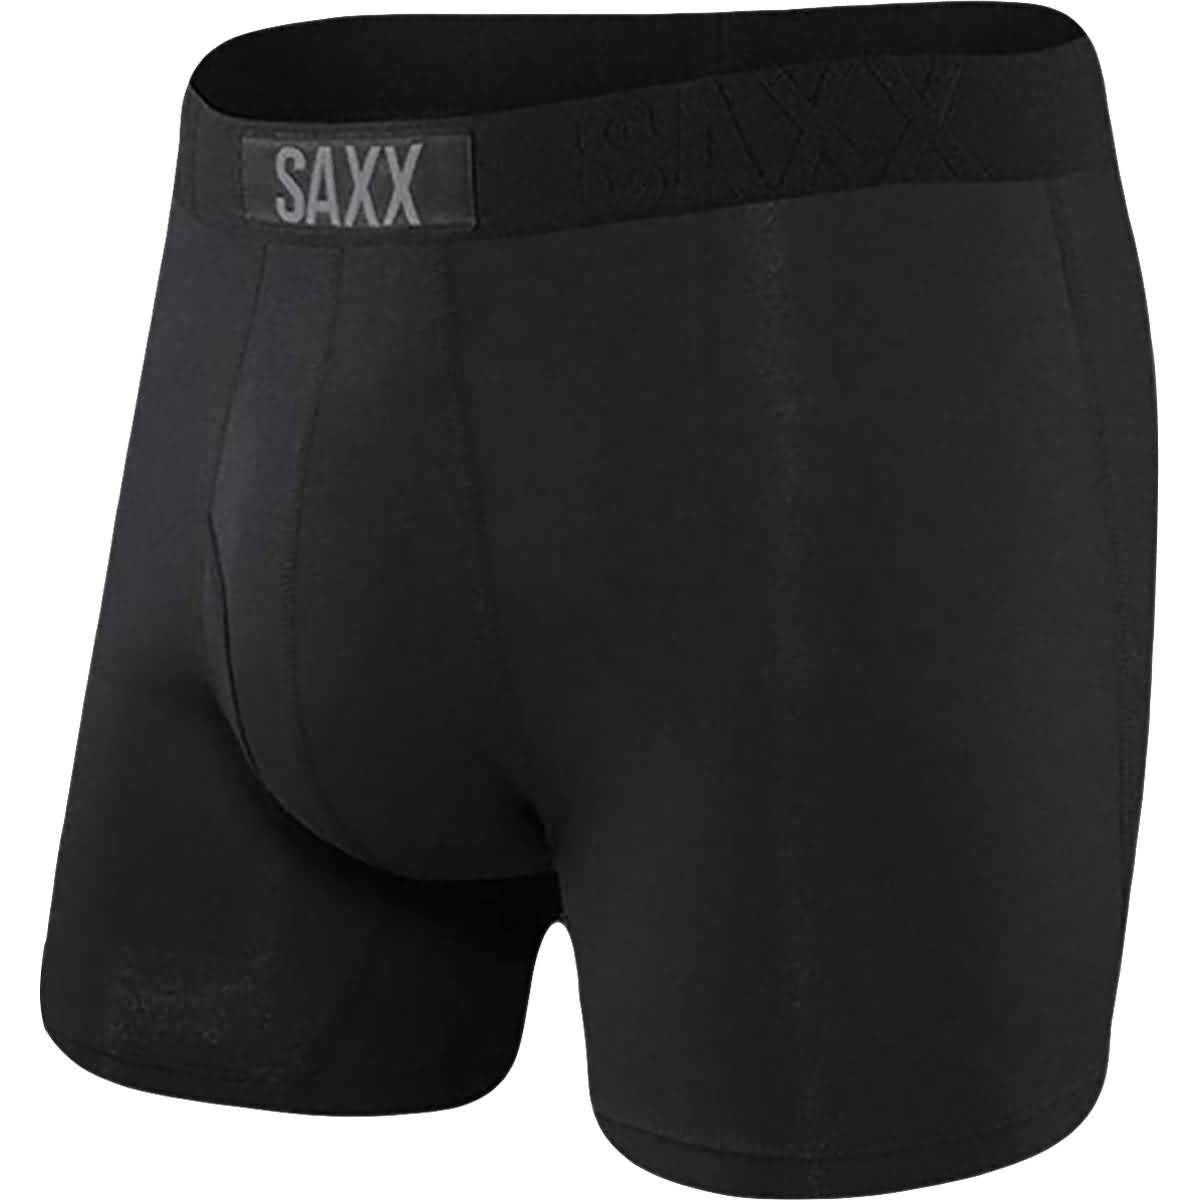 Saxx Regular Size XL Men's Boxer Brief for sale